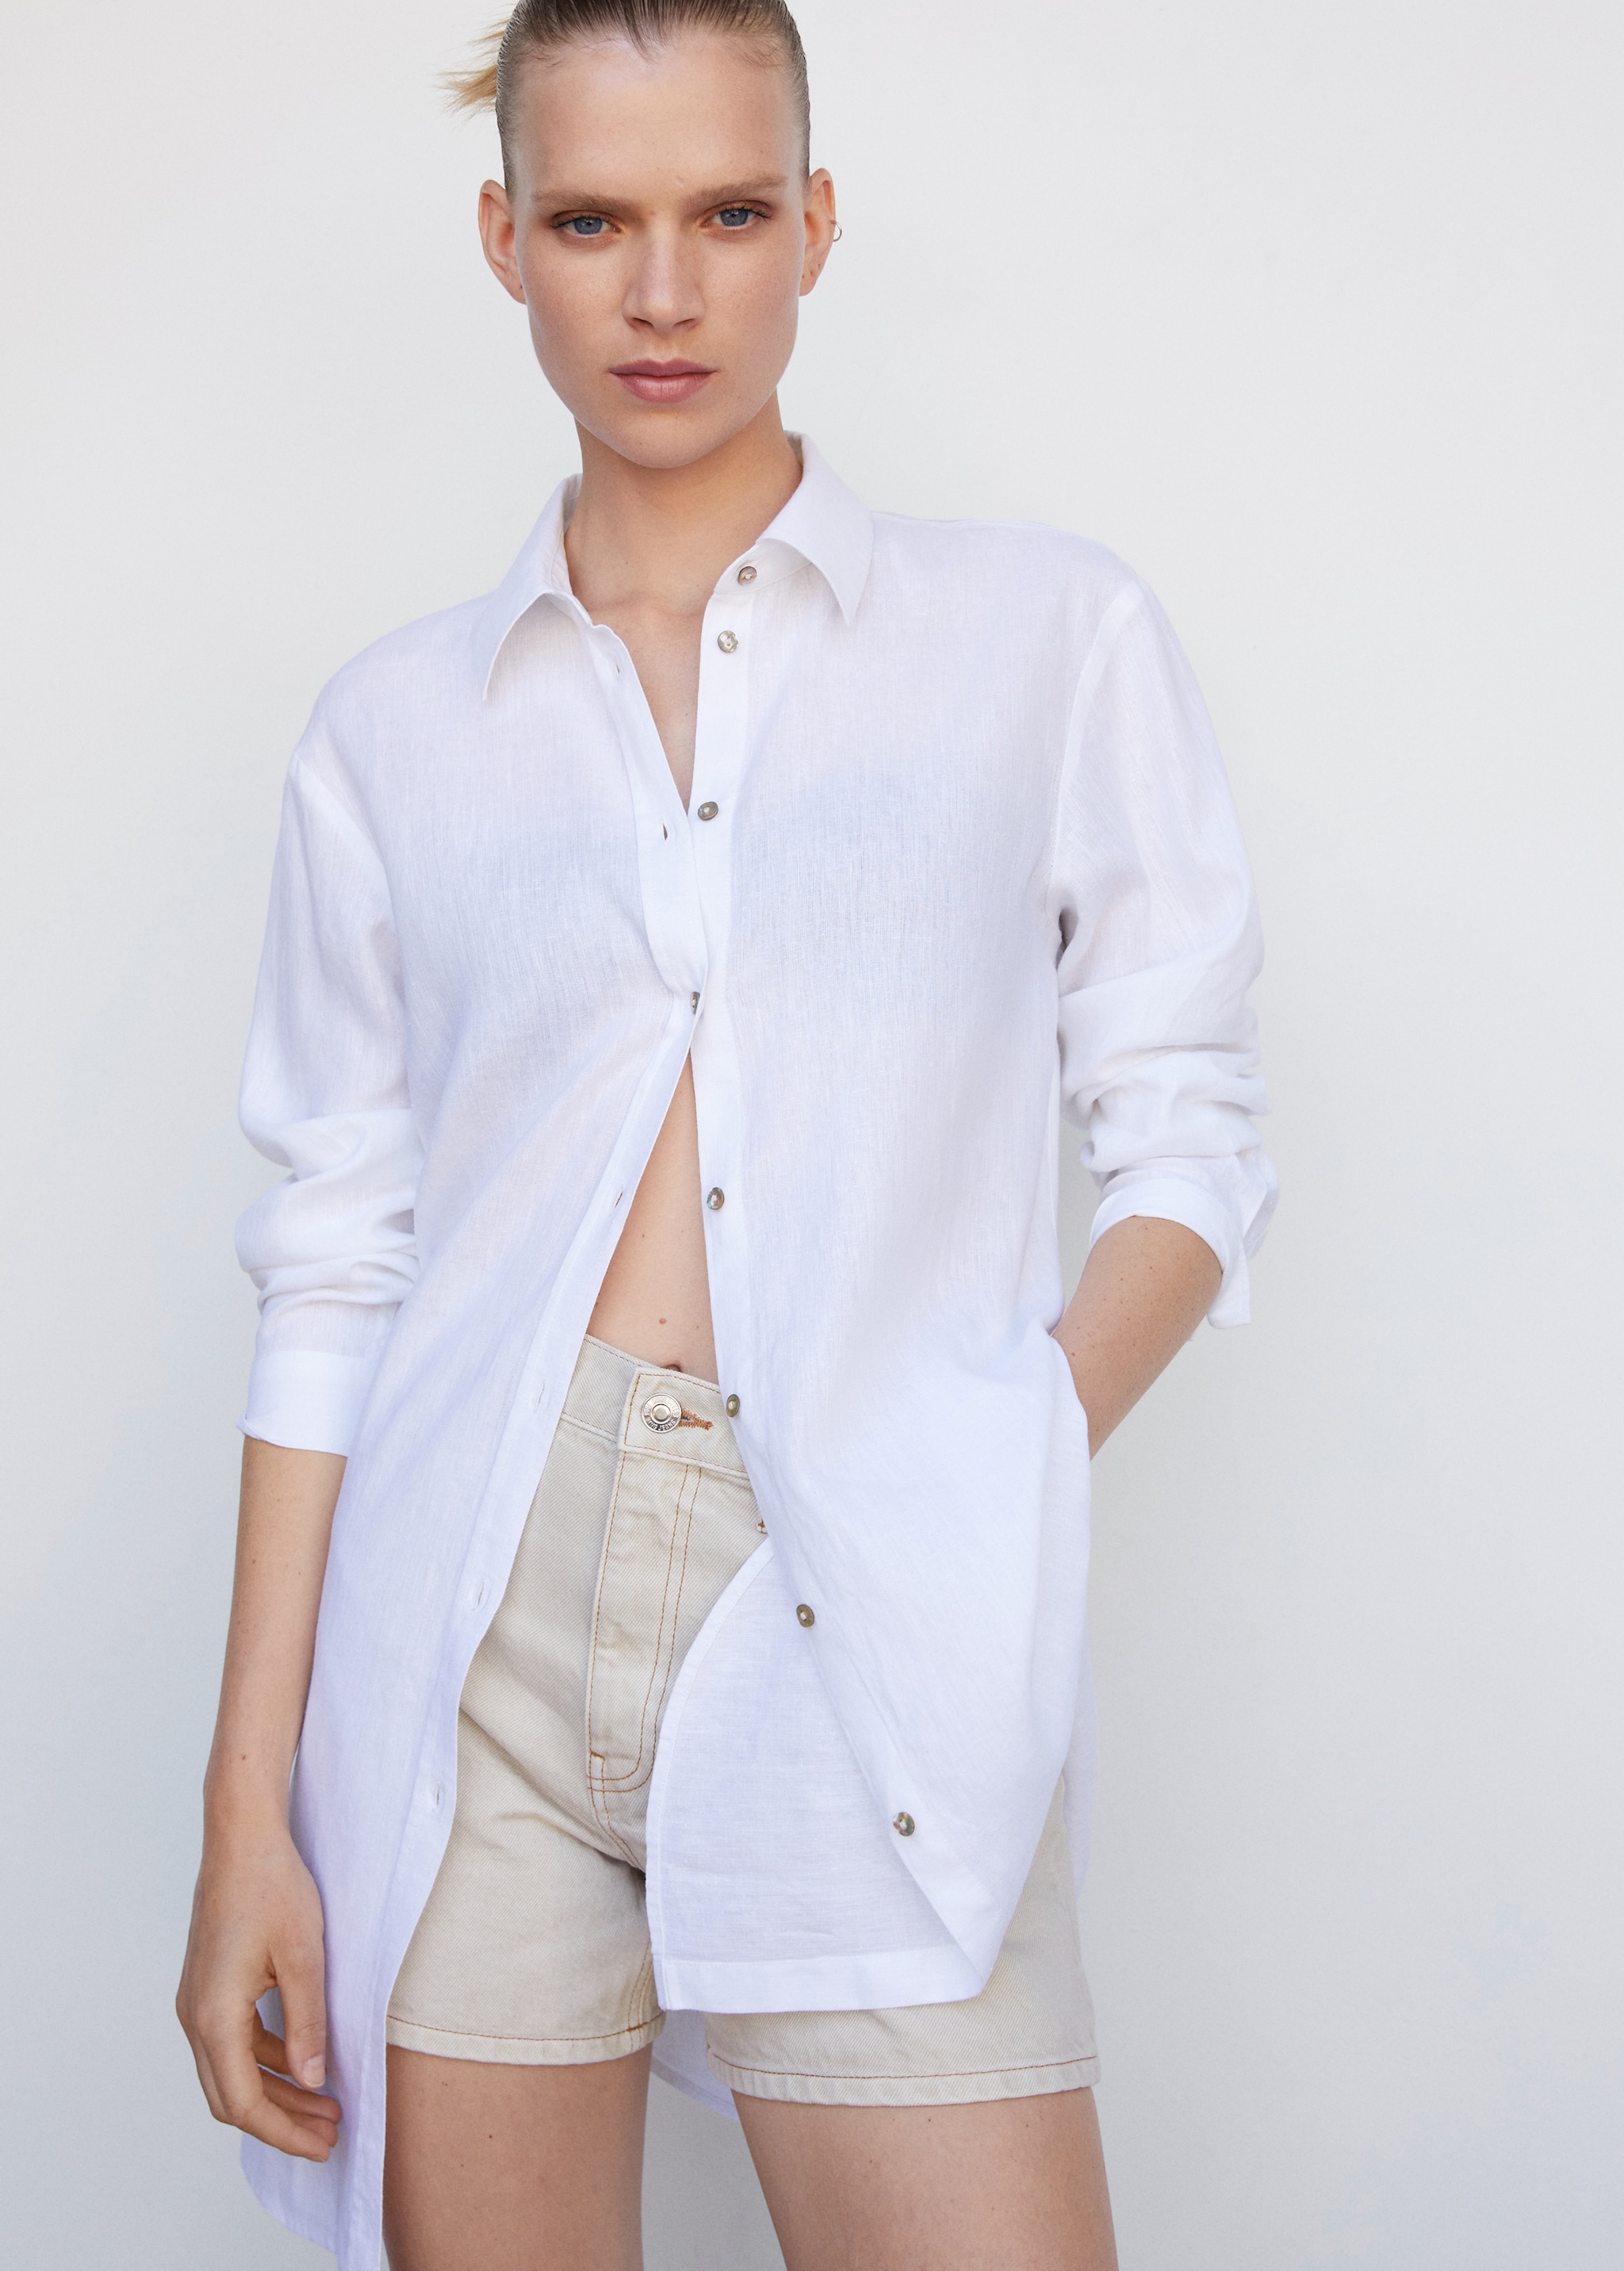 Linen oversized shirt - Medium plane